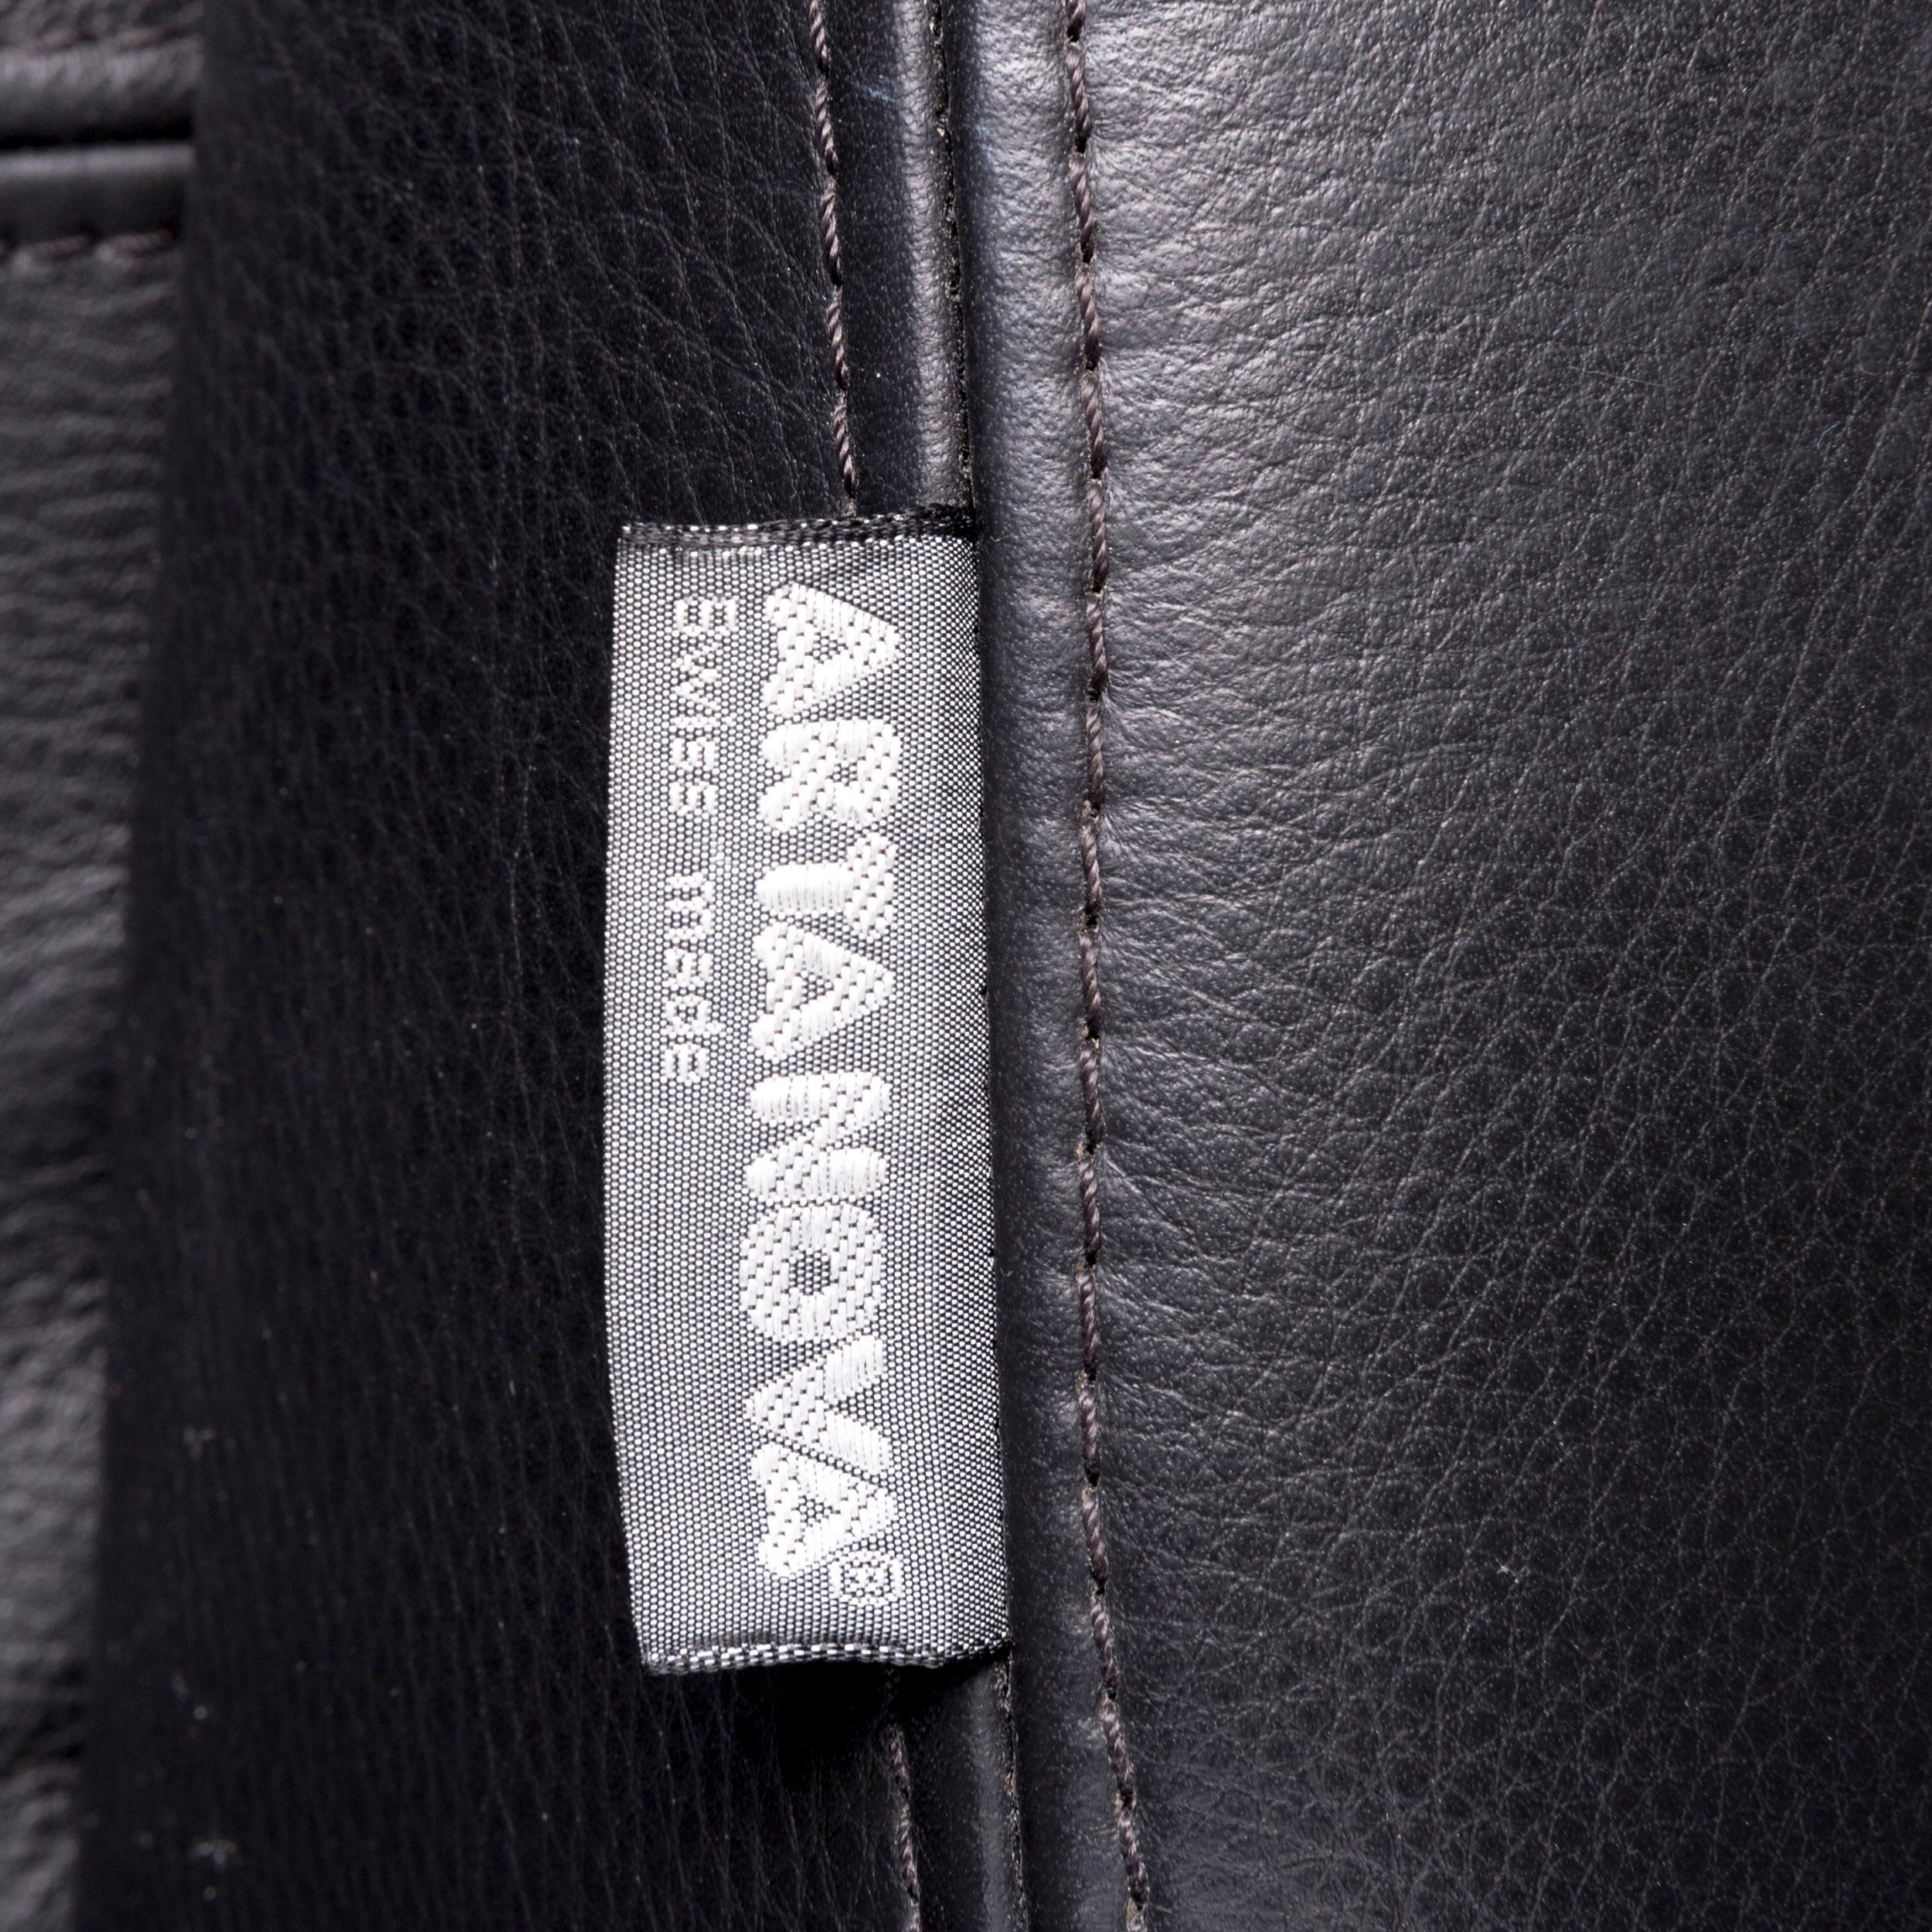 Contemporary Artanova Medea Designer Leather Corner Sofa Black Genuine Leather Sofa Couch